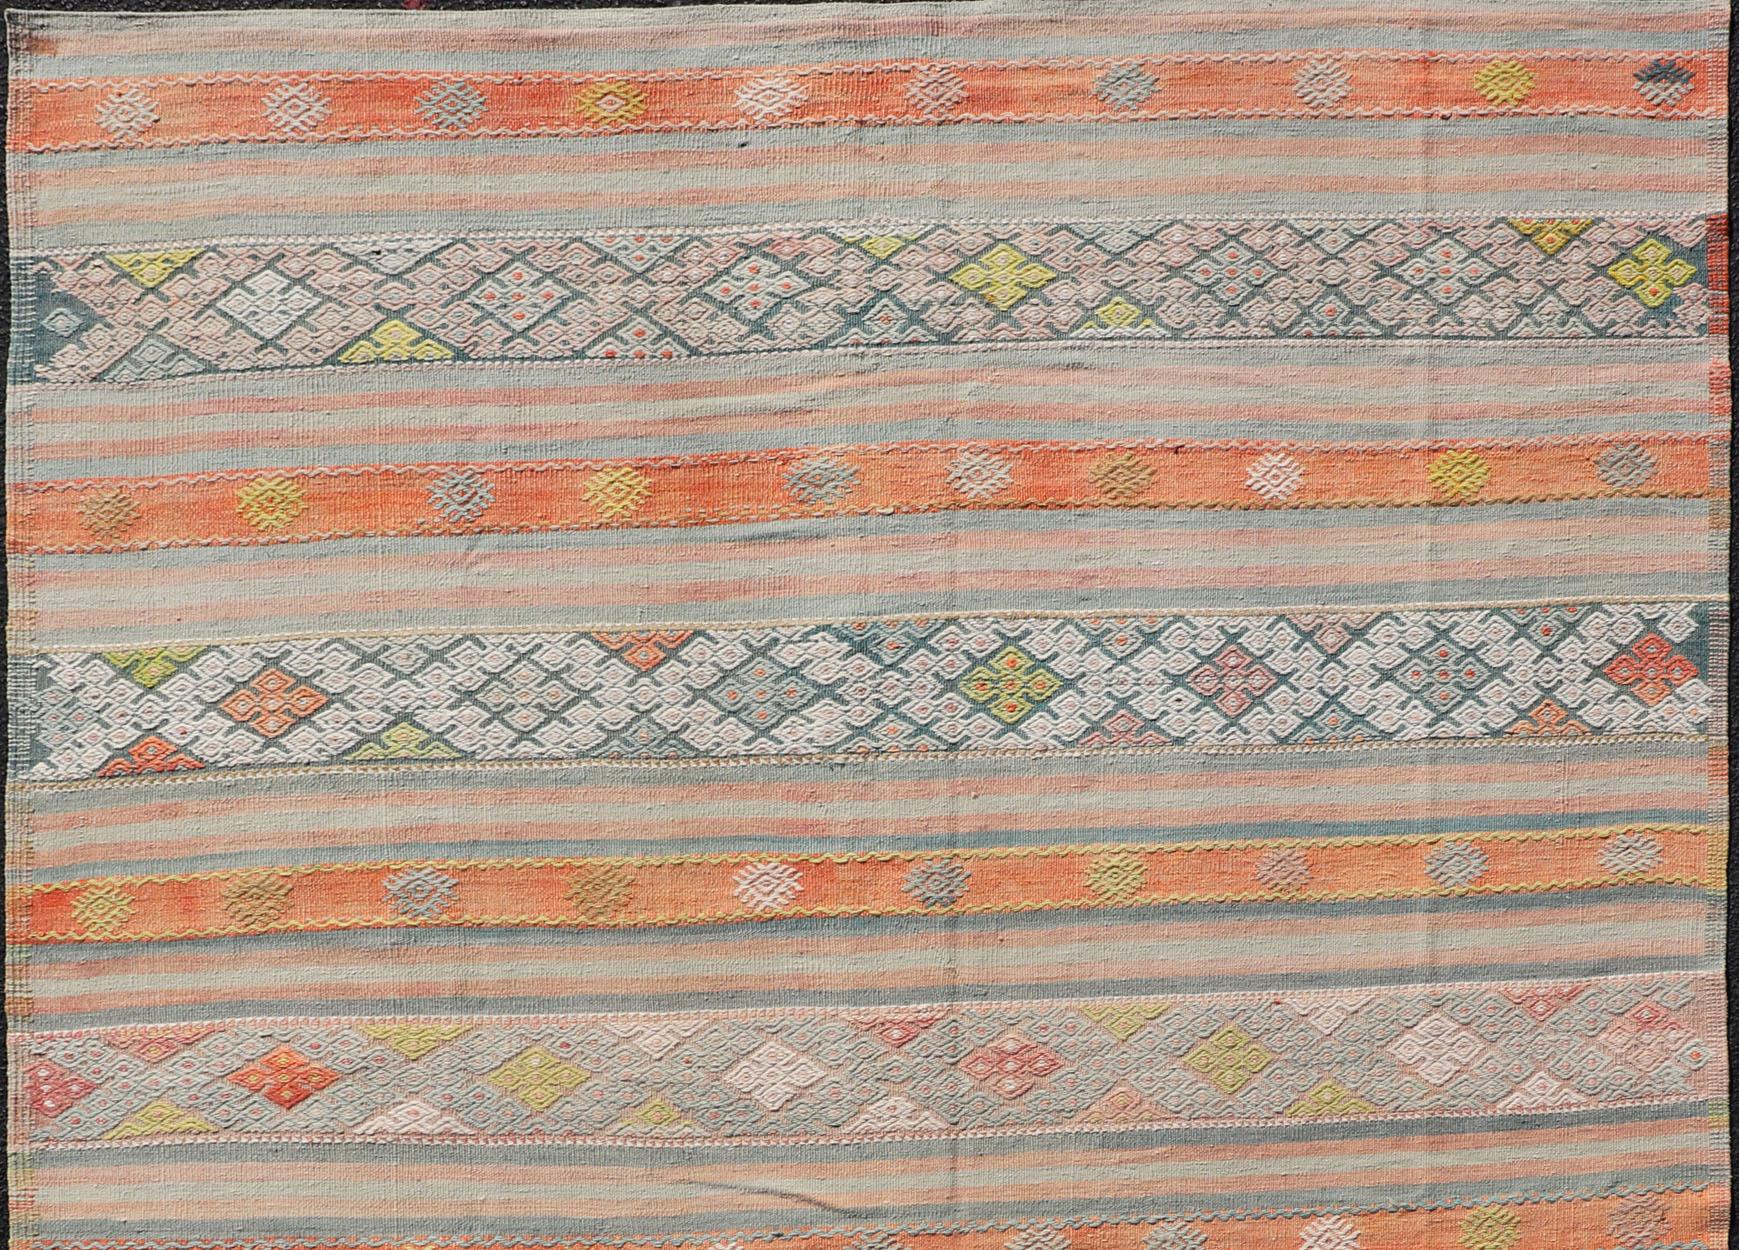 Colorful Vintage Turkish Embroidered Kilim With Stripe's and Geometric Motifs.  Geometric stripe design Kilim rug in multi-colors, Keivan Woven Arts / rug EN-179941, country of origin / type: Turkey / Kilim, circa 1950

This vintage Kilim displays